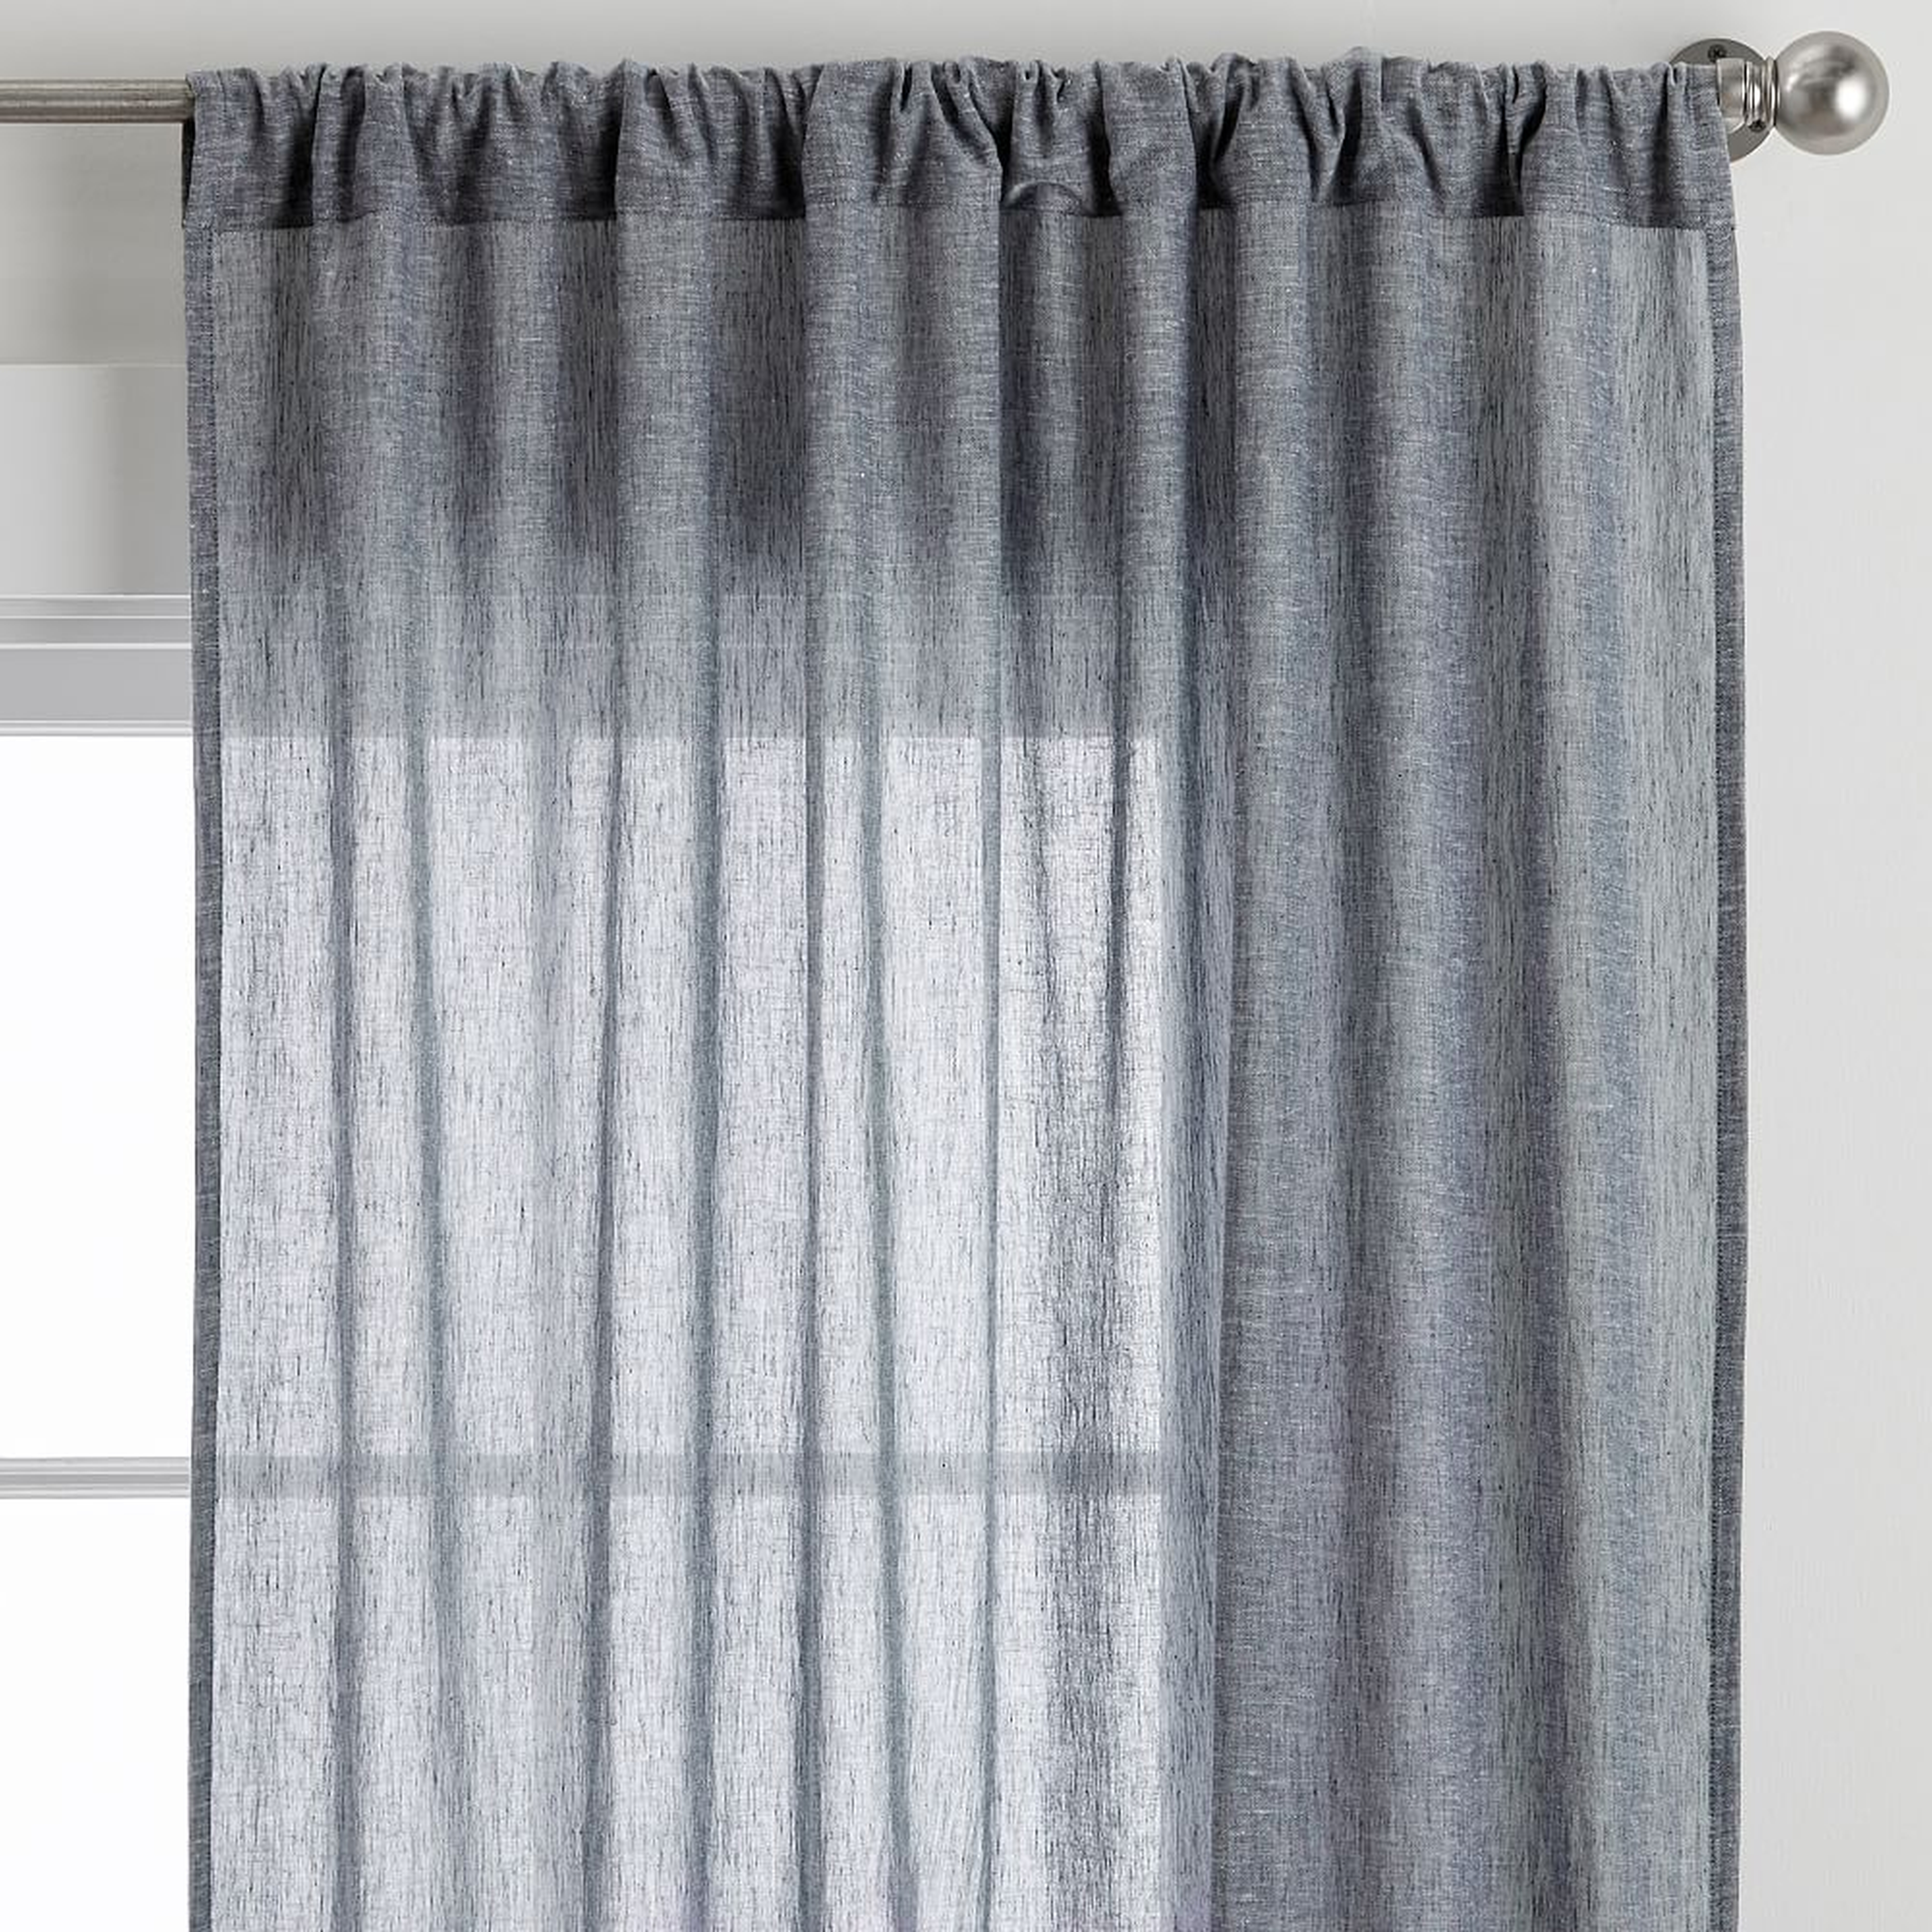 Cotton Linen Sheer Curtain Set of 2, White/Navy, 44" x 96" - Pottery Barn Teen